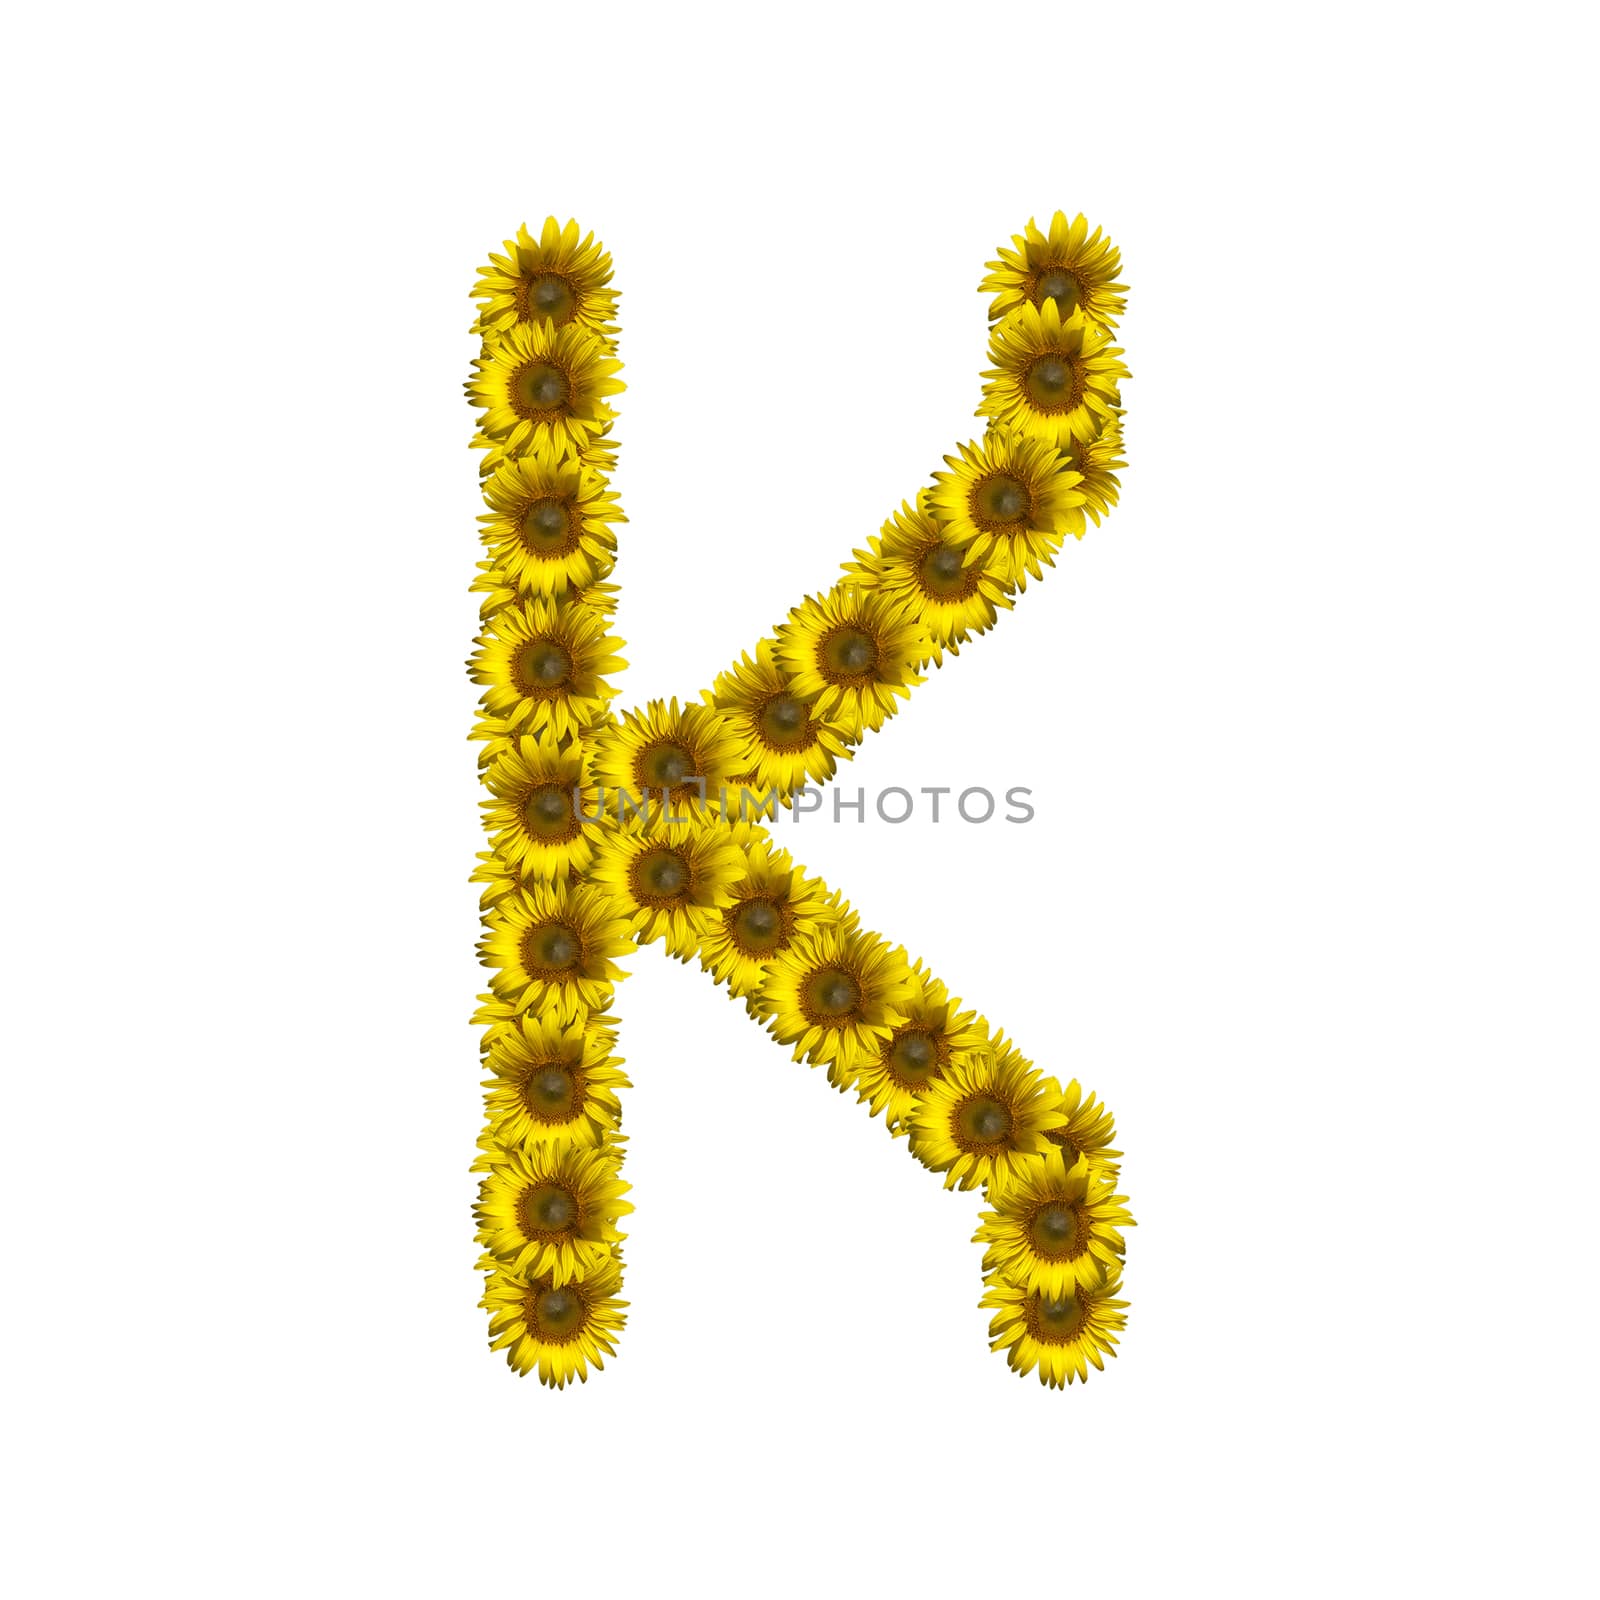 Isolated sunflower alphabet K by Exsodus